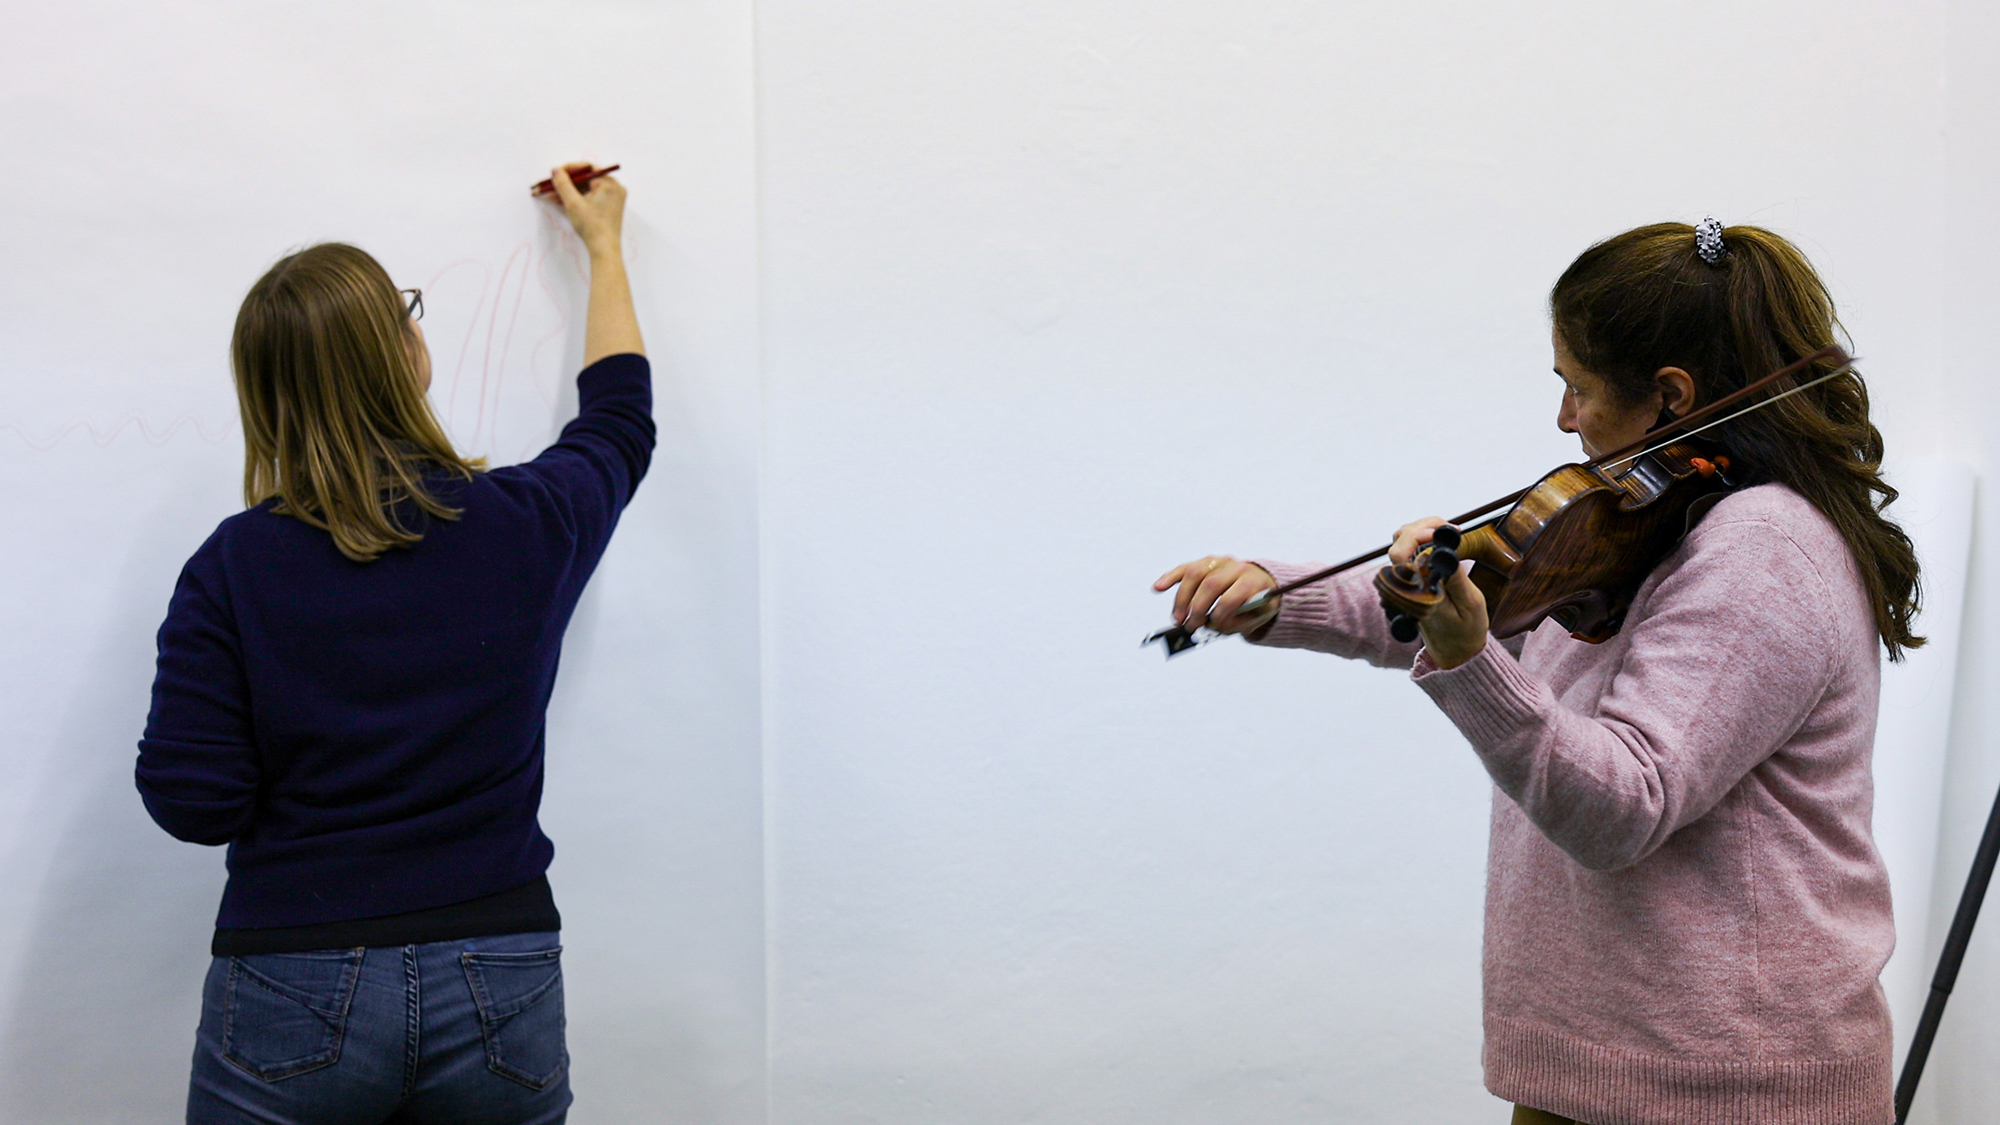 Workshop Performance with Susanne Hehenberger, Agustín Castilla-Ávila and Paul Eiser